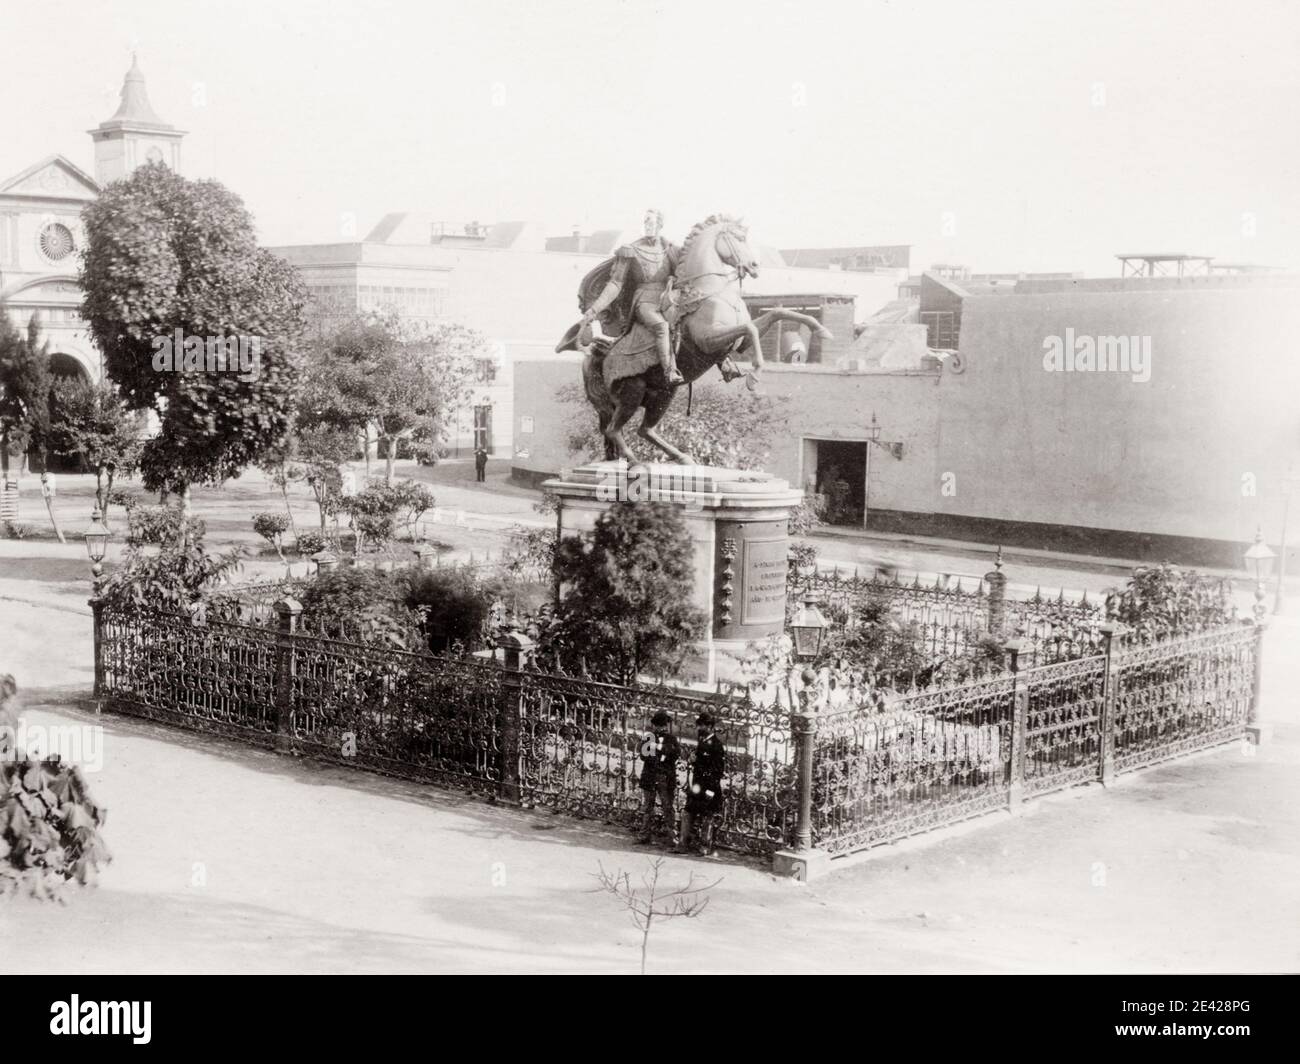 Vintage 19th century photograph: Simon Bolivar equestrian, horse, statue, Lima Peru. Stock Photo